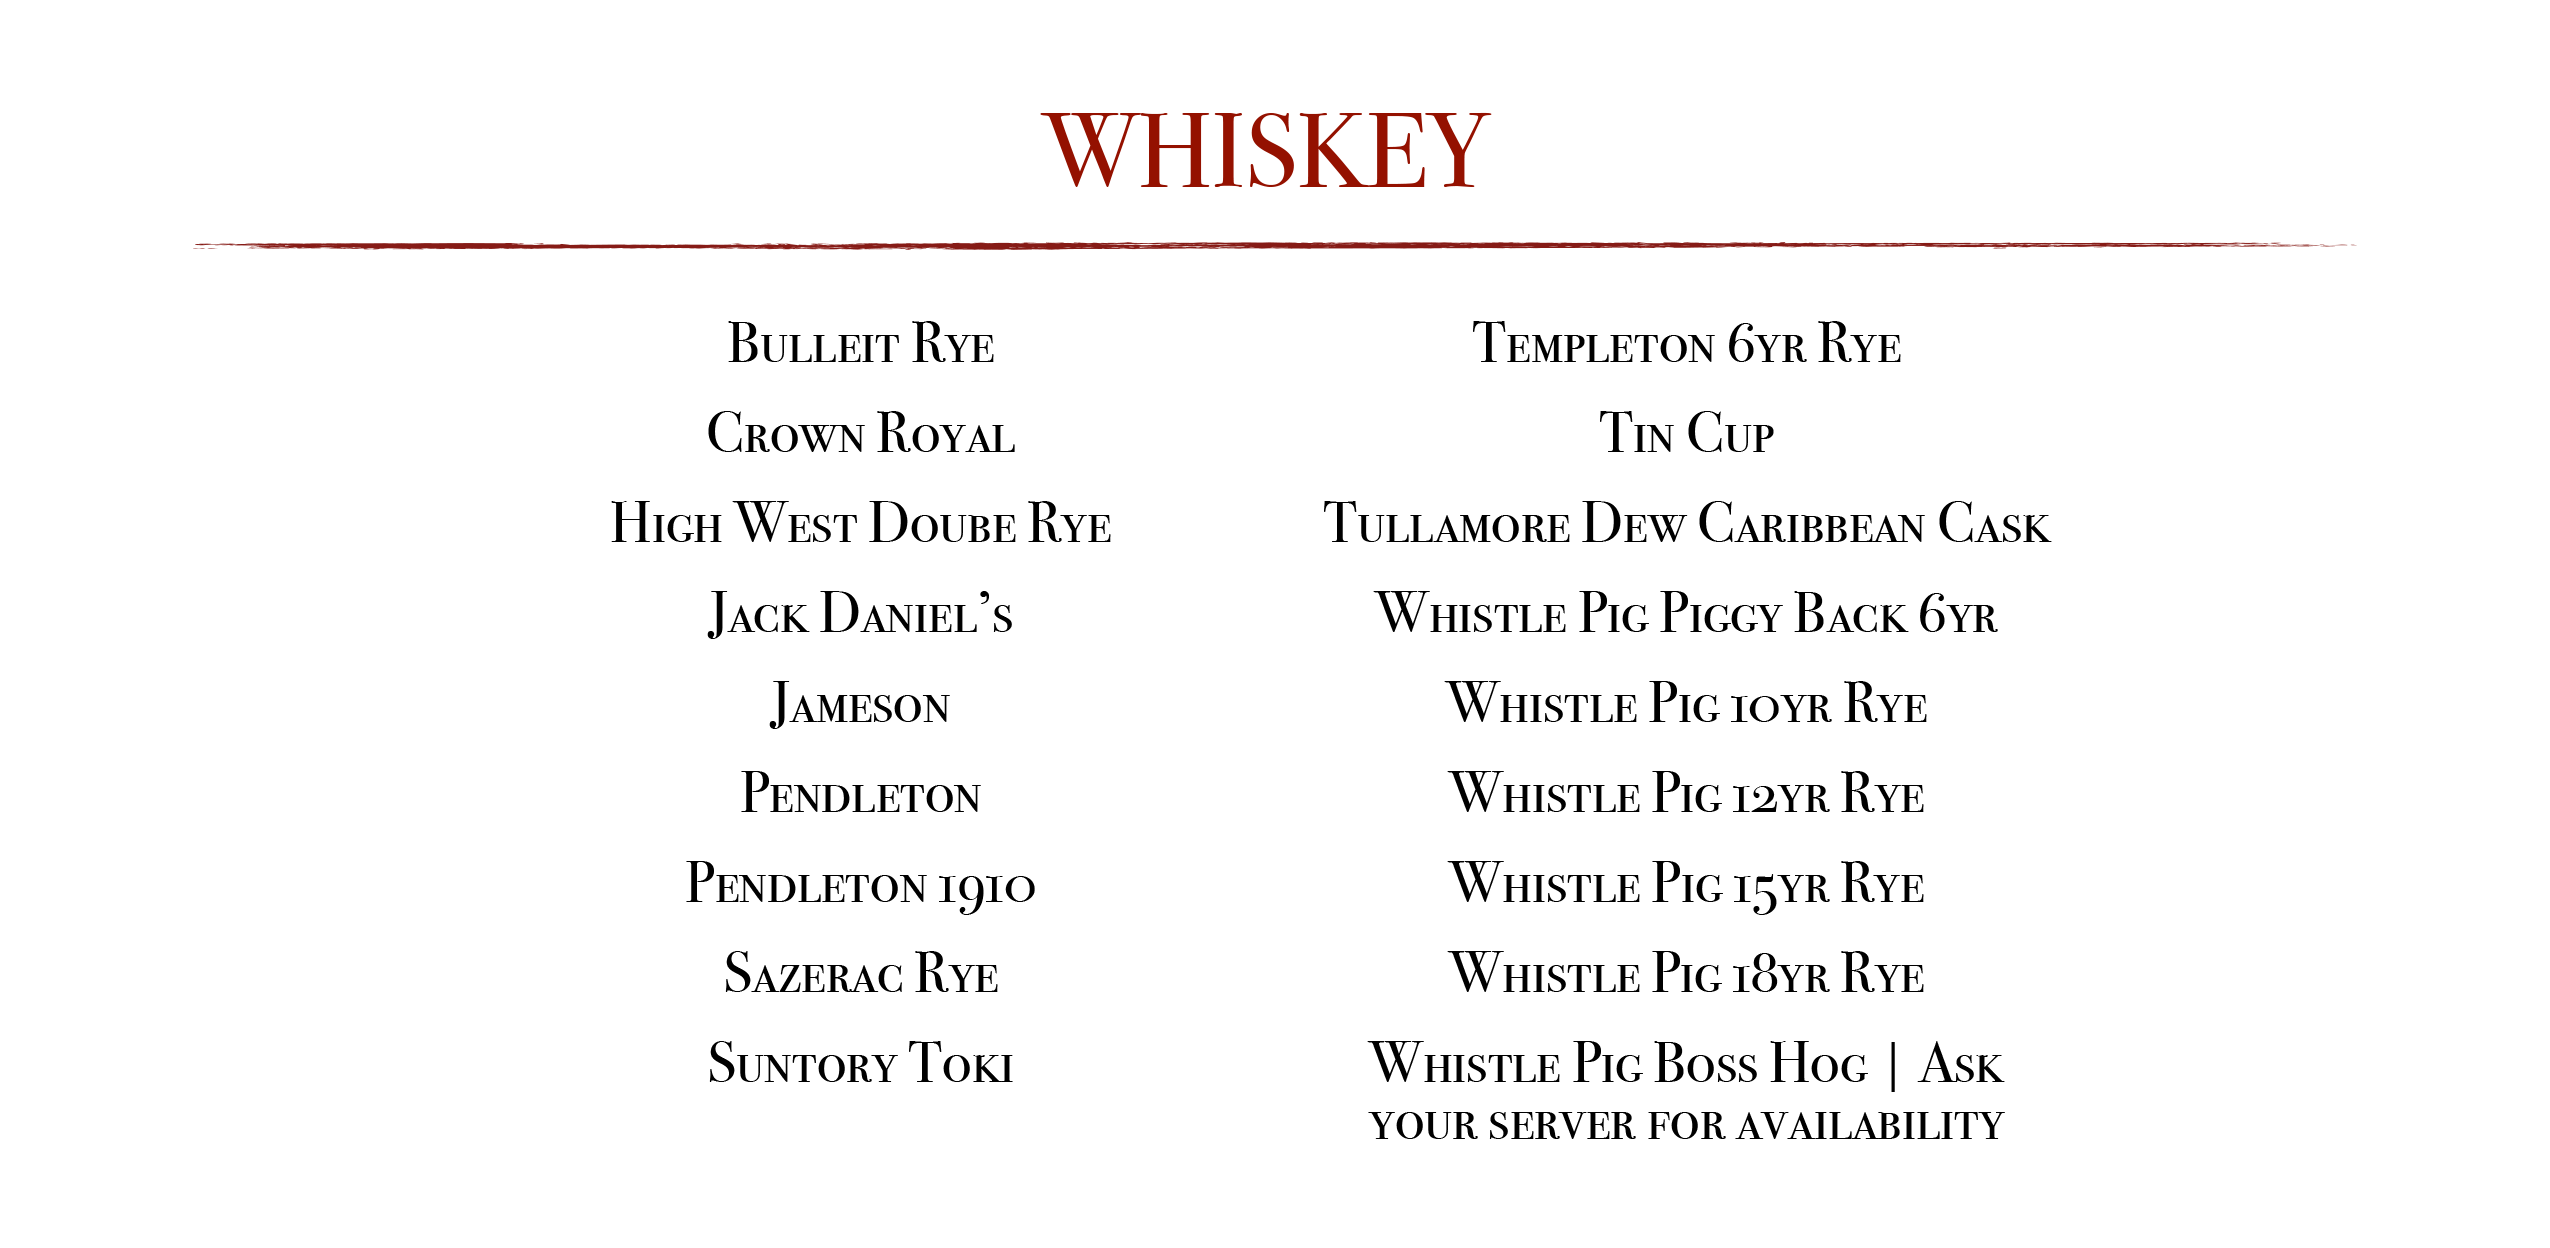 Whiskey: Bulleit Rye, Crown Royal, High West Doube Rye, Jack Daniel's, Jameson, Pendleton, Pendleton 1910, Sazerac Rye, Suntory Toki, Templeton 6 yr Rye, Tin Cup, Tullamore Dew Carribean Cask, Whistle Pig Piggy Back 6yr 10yr 12yr 15 yr or 18 yr, Whistle Pig Boss Hog ask for availabilty